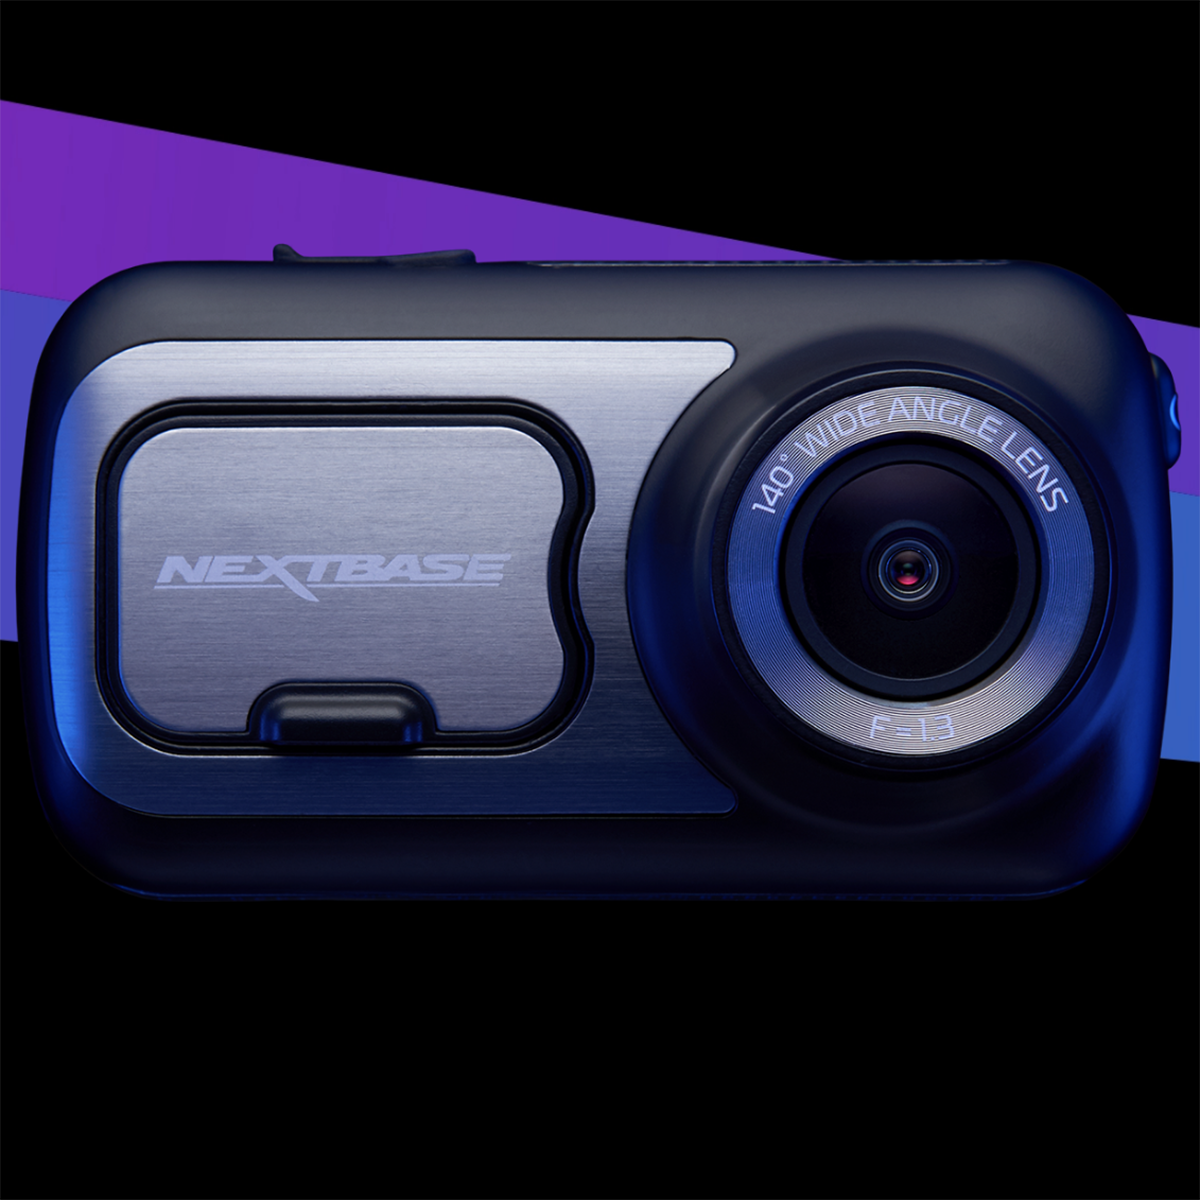 NextBase 422GW Dash Cam Review